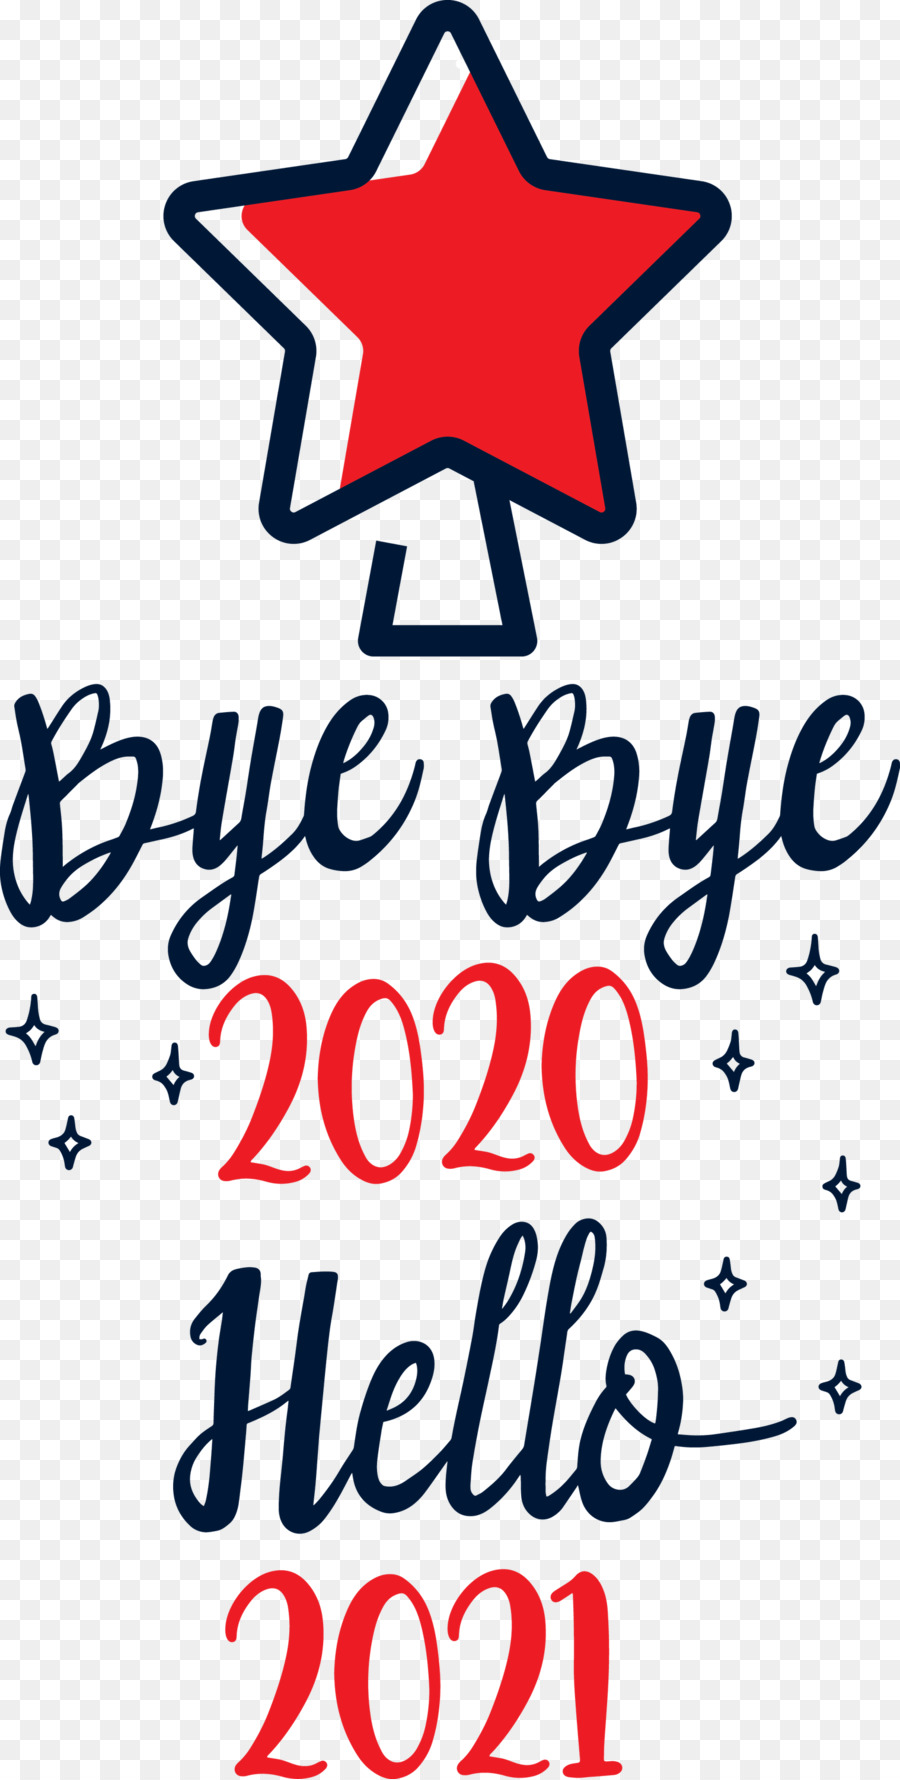 Hello 2021 Year Bye bye 2020 Year - 